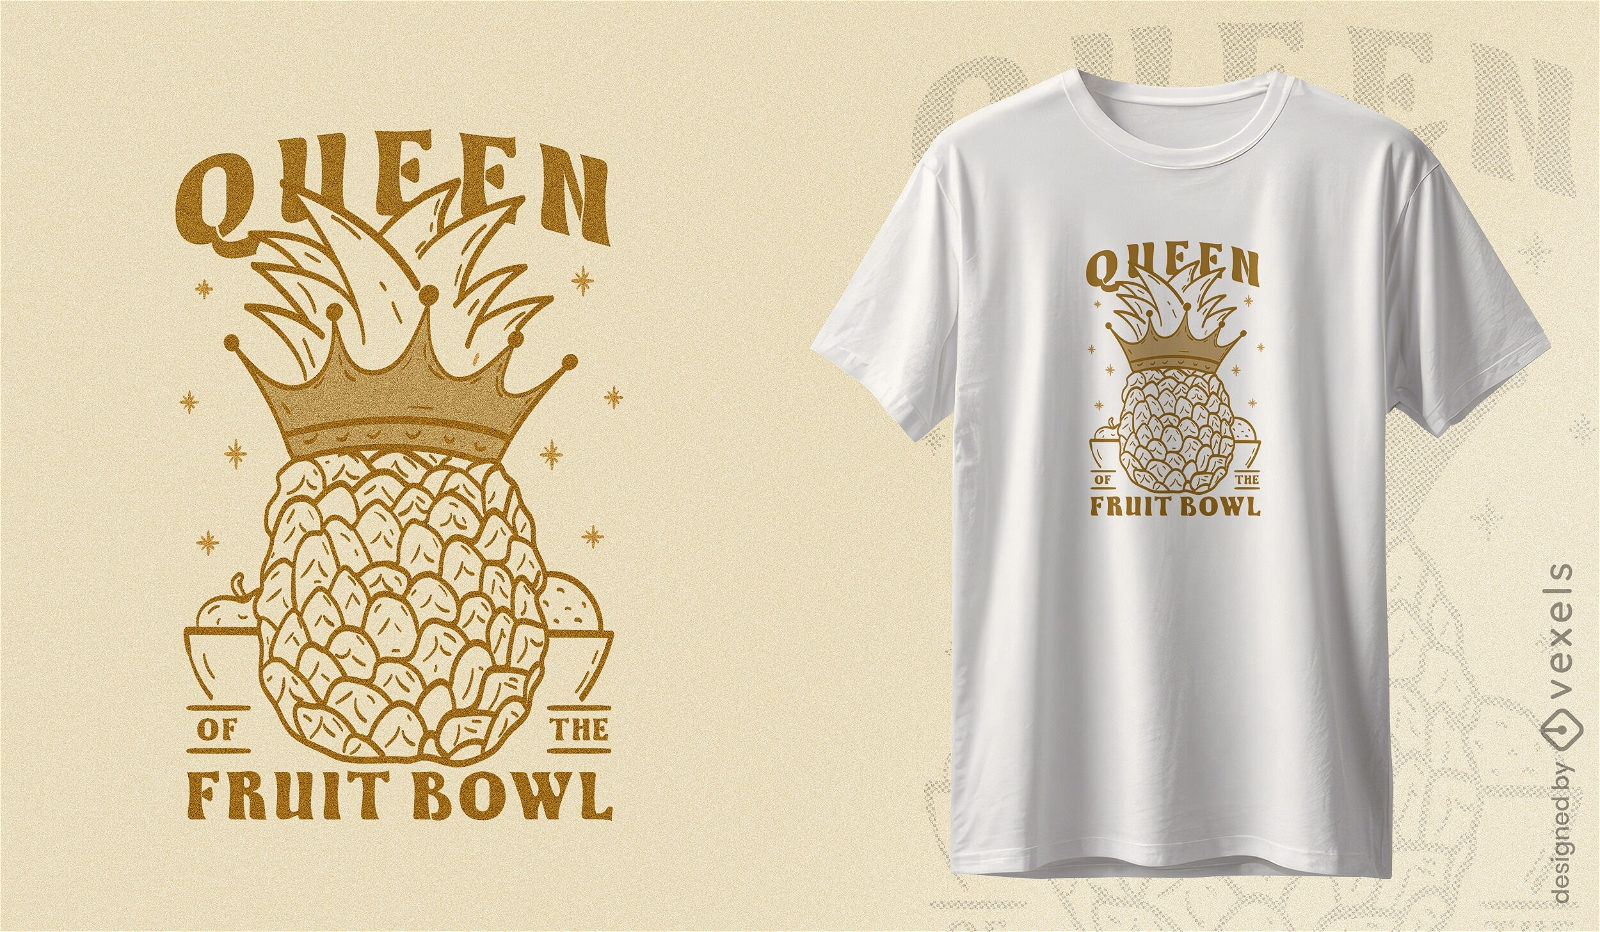 Diseño de camiseta de la reina del frutero de la piña.